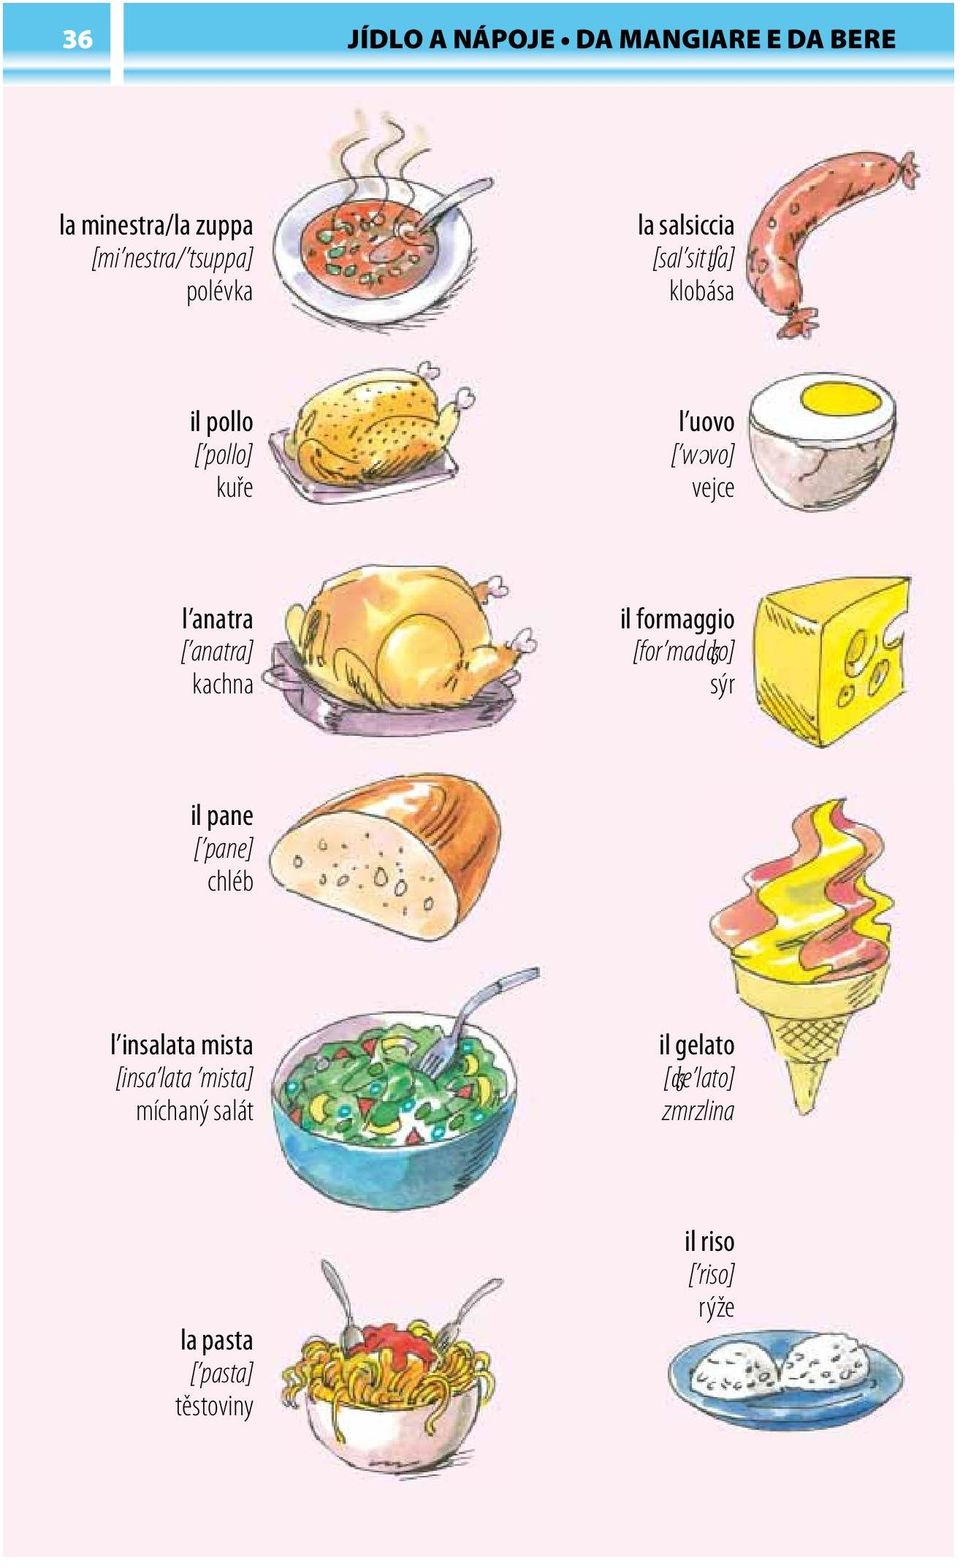 kachna il formaggio [for madʤo] sýr il pane [ pane] chléb l insalata mista [insa lata mista]